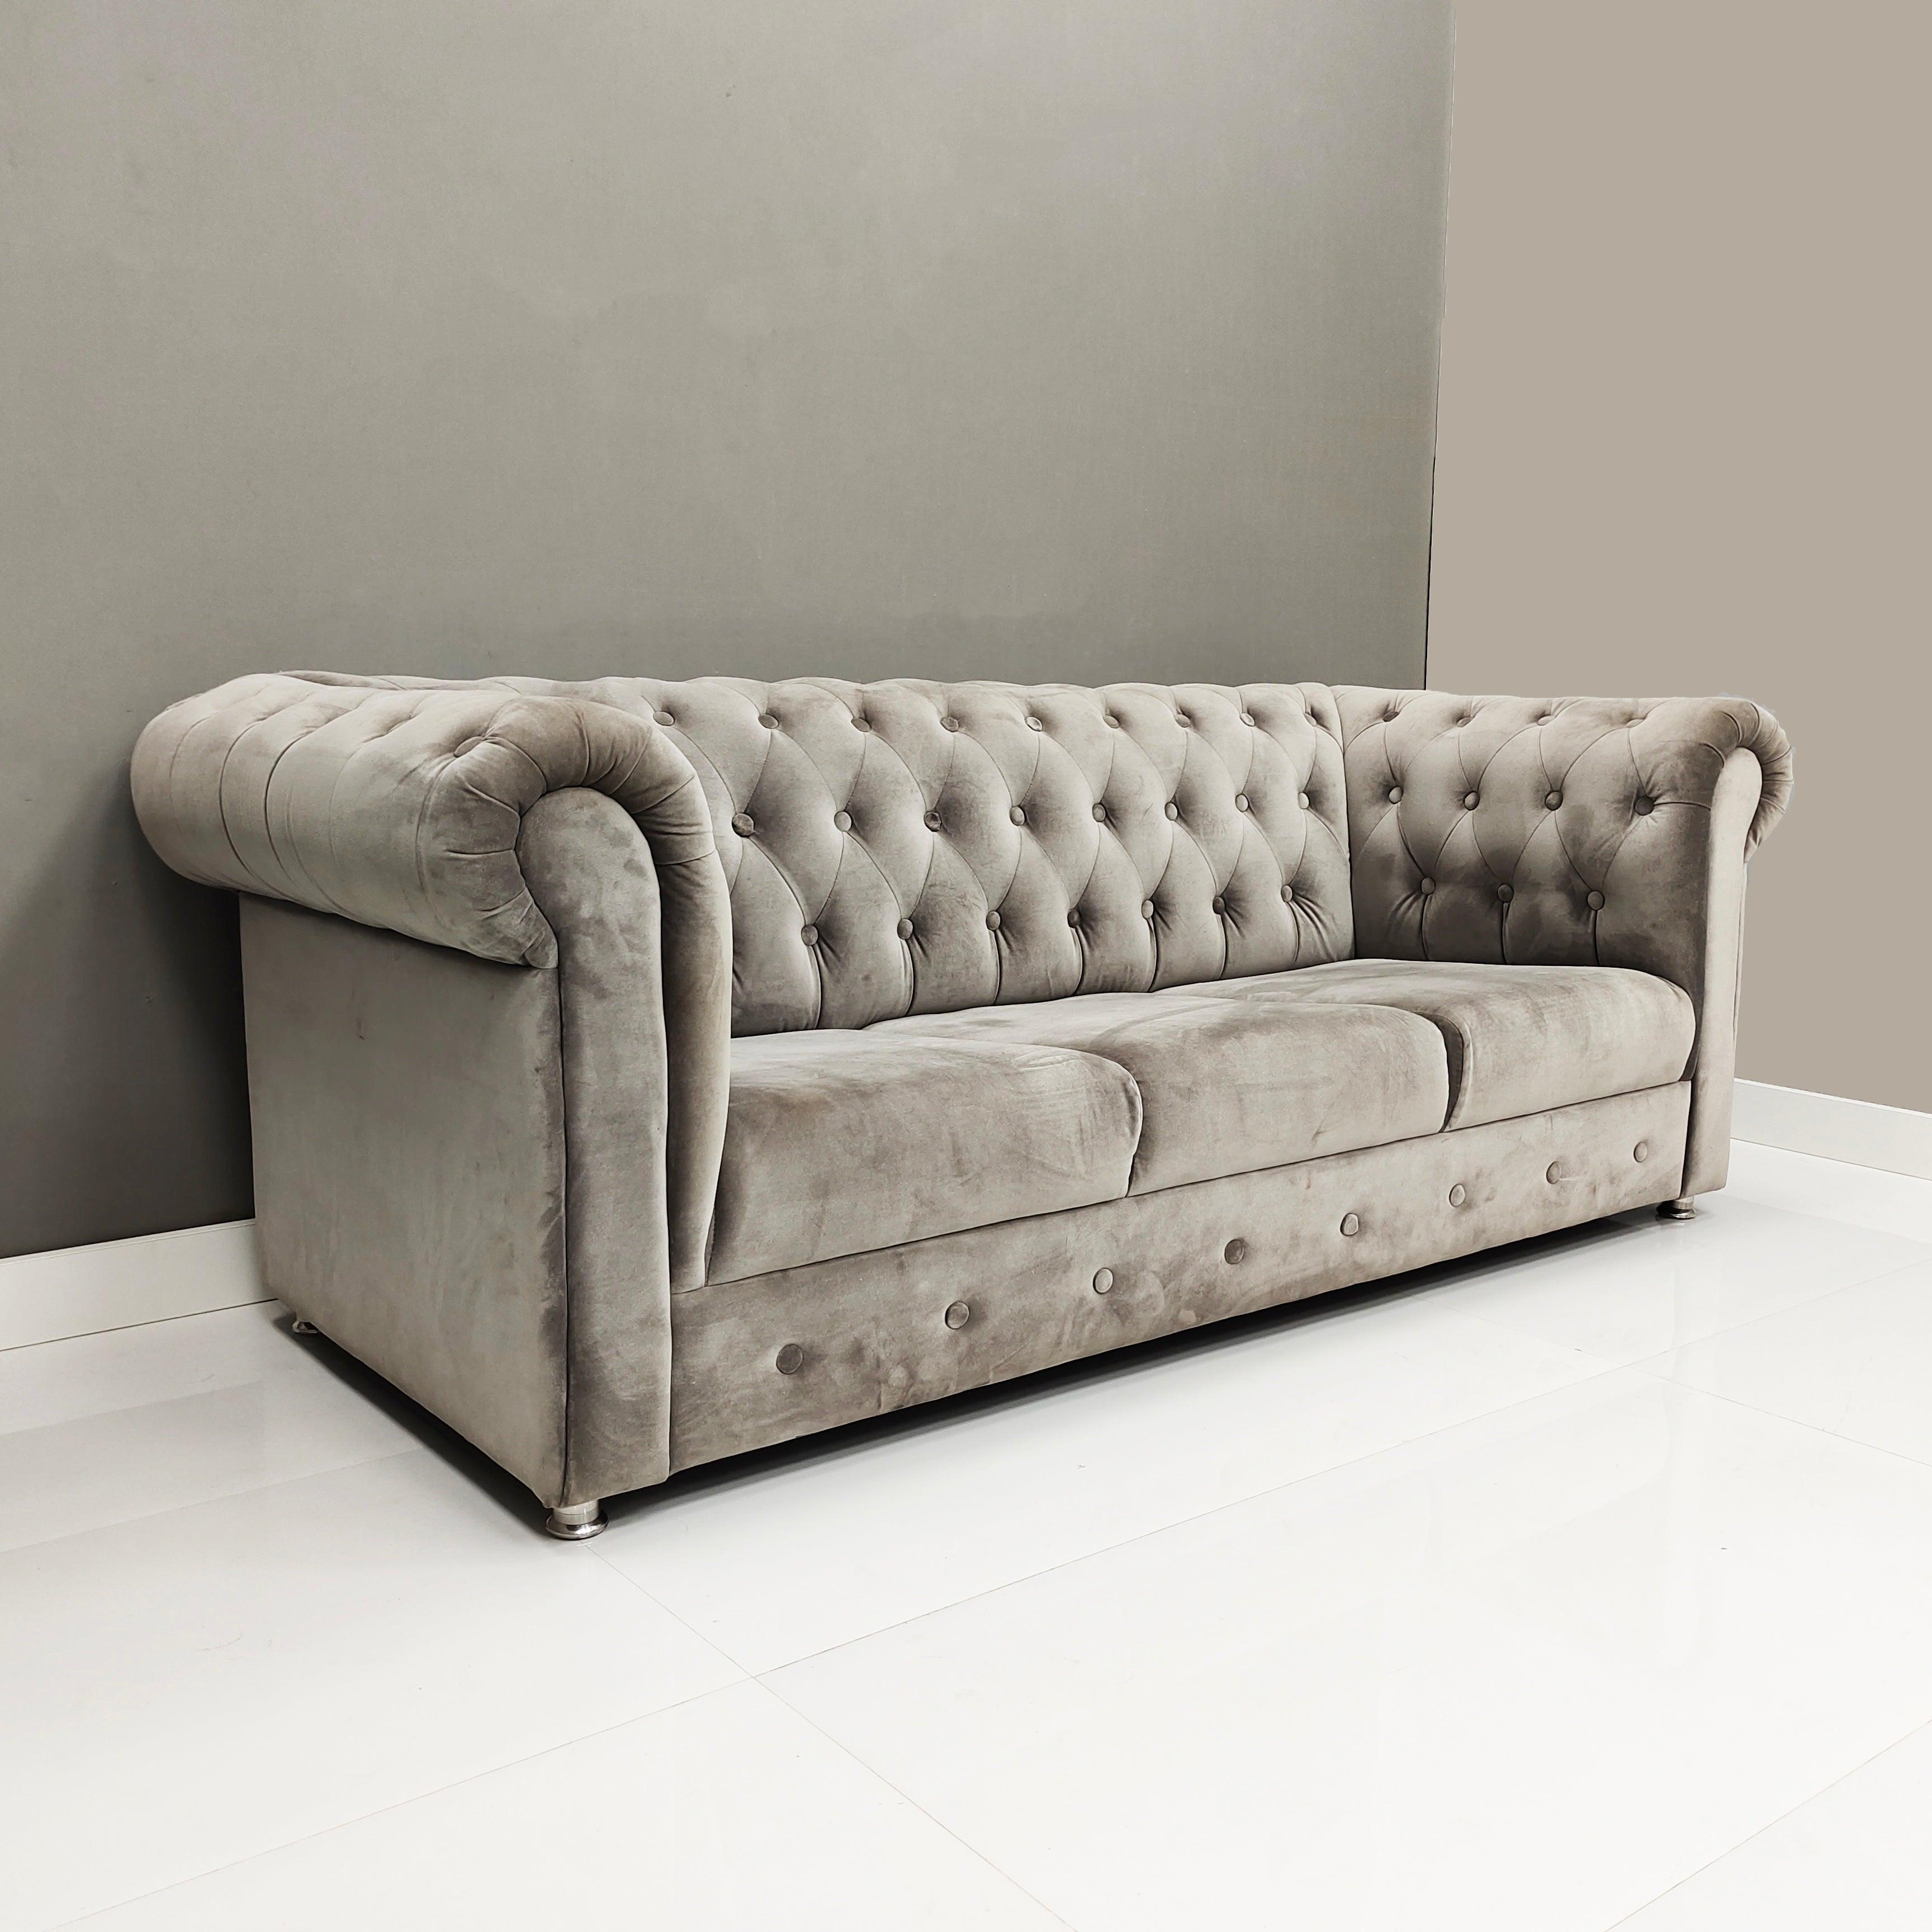 Fornax 3-Seater Sofa - InvisibleBed.com